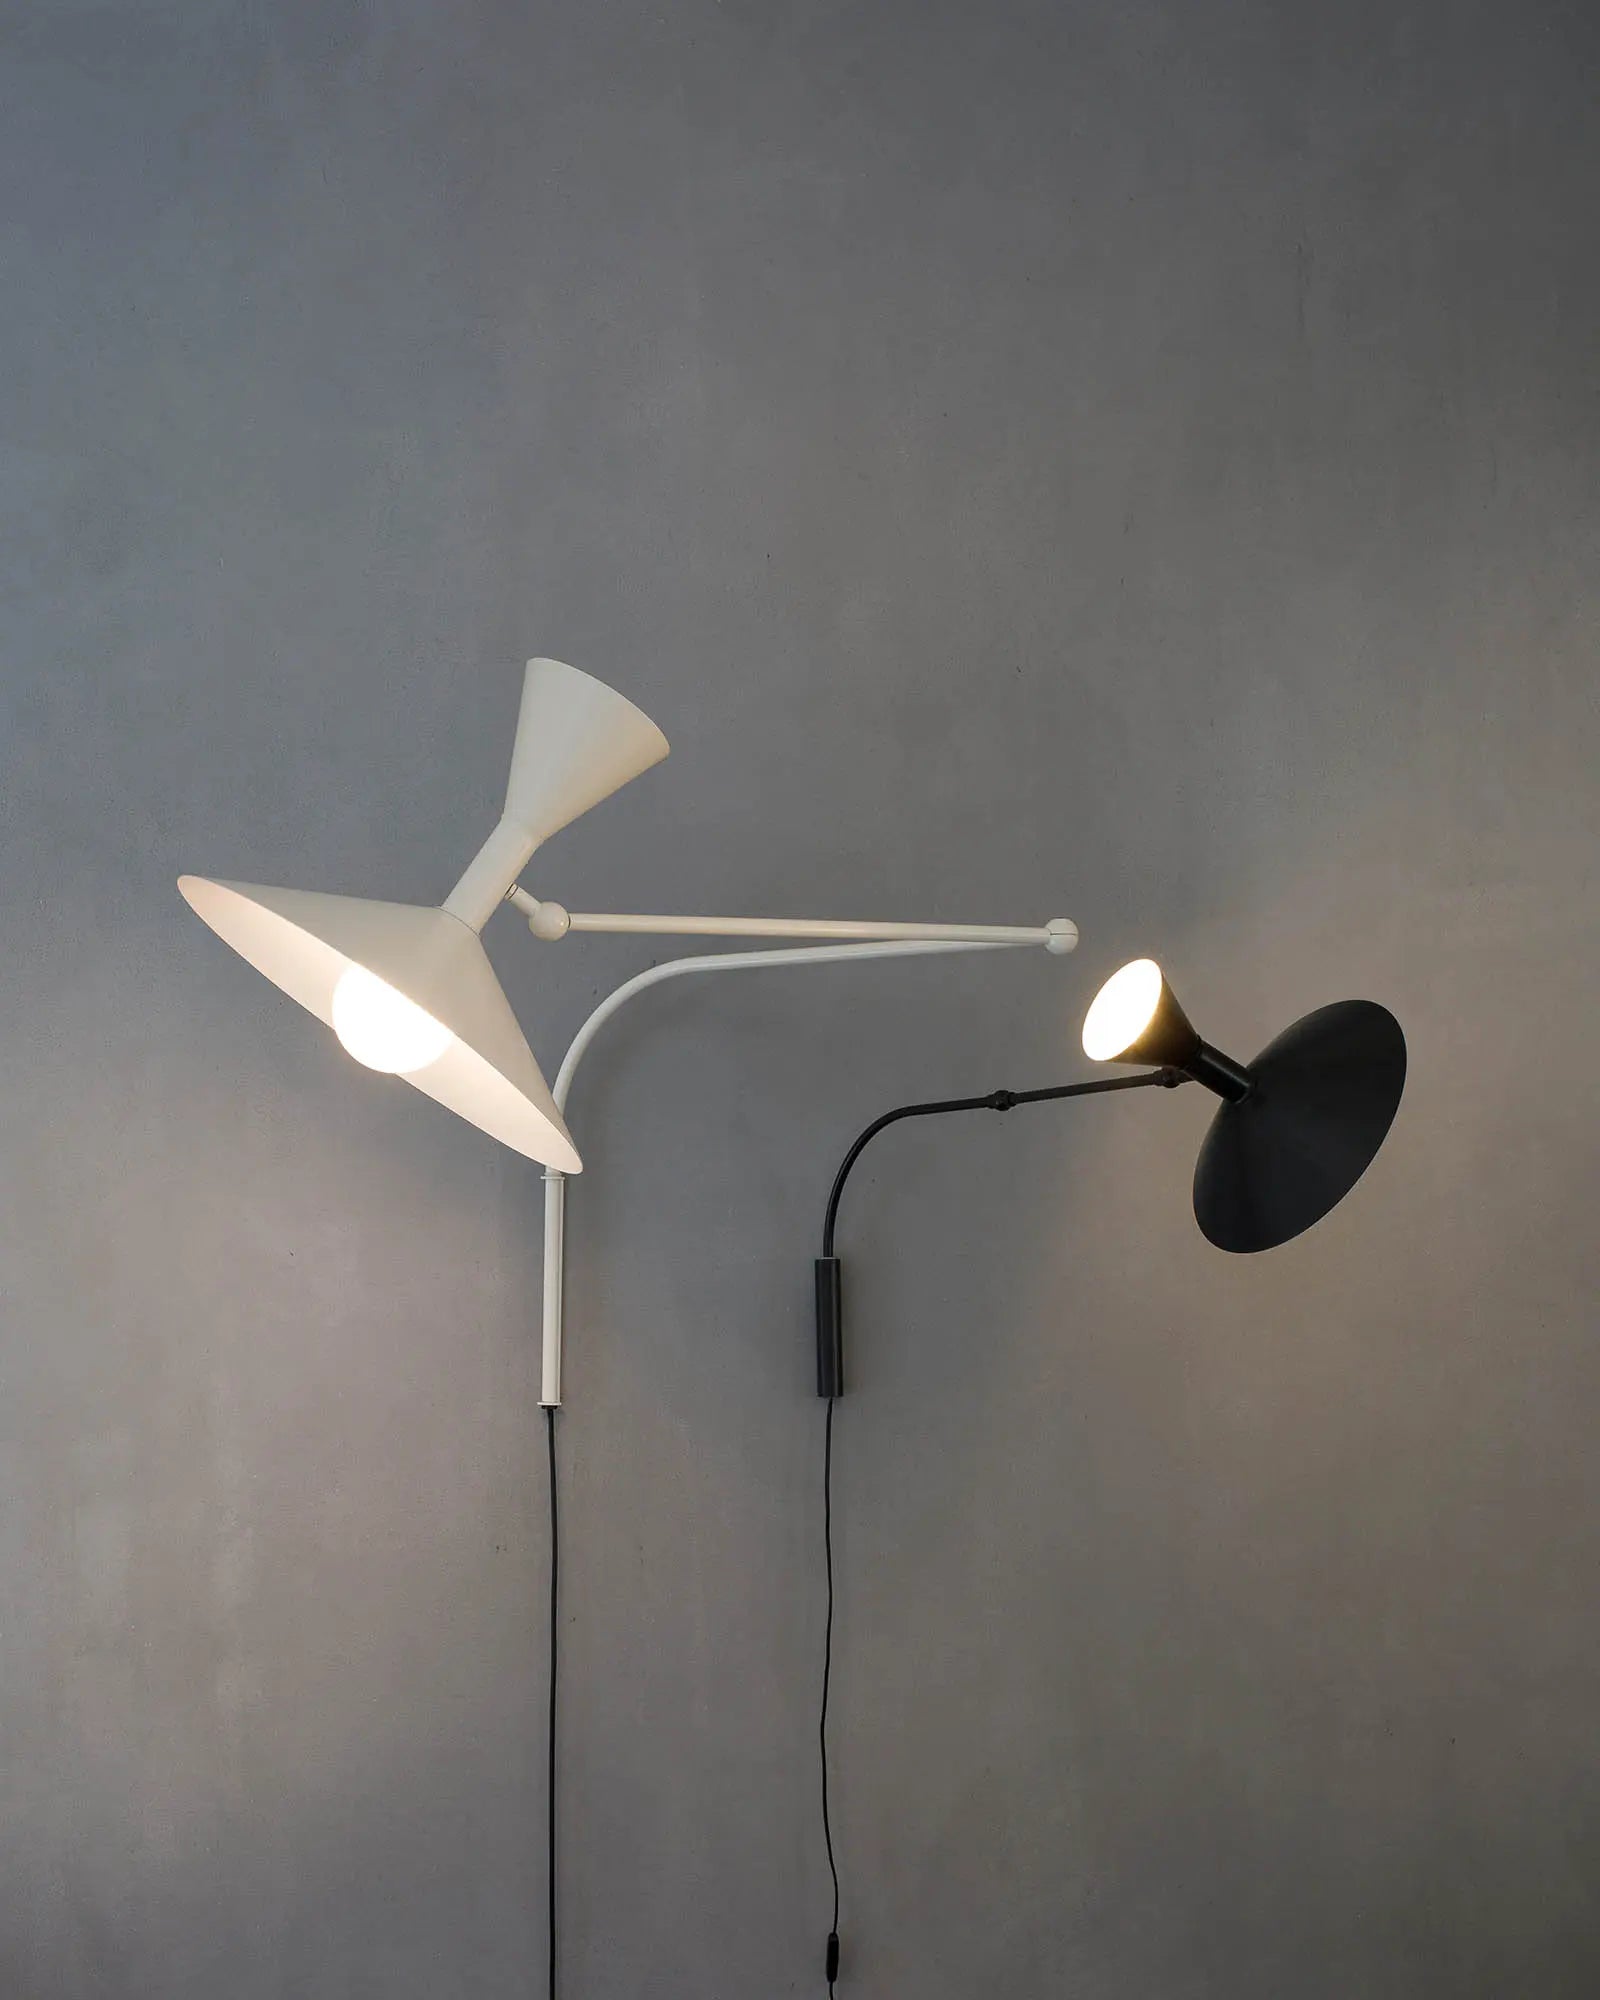 Lamp de Marseille iconic adjustable modern wall light